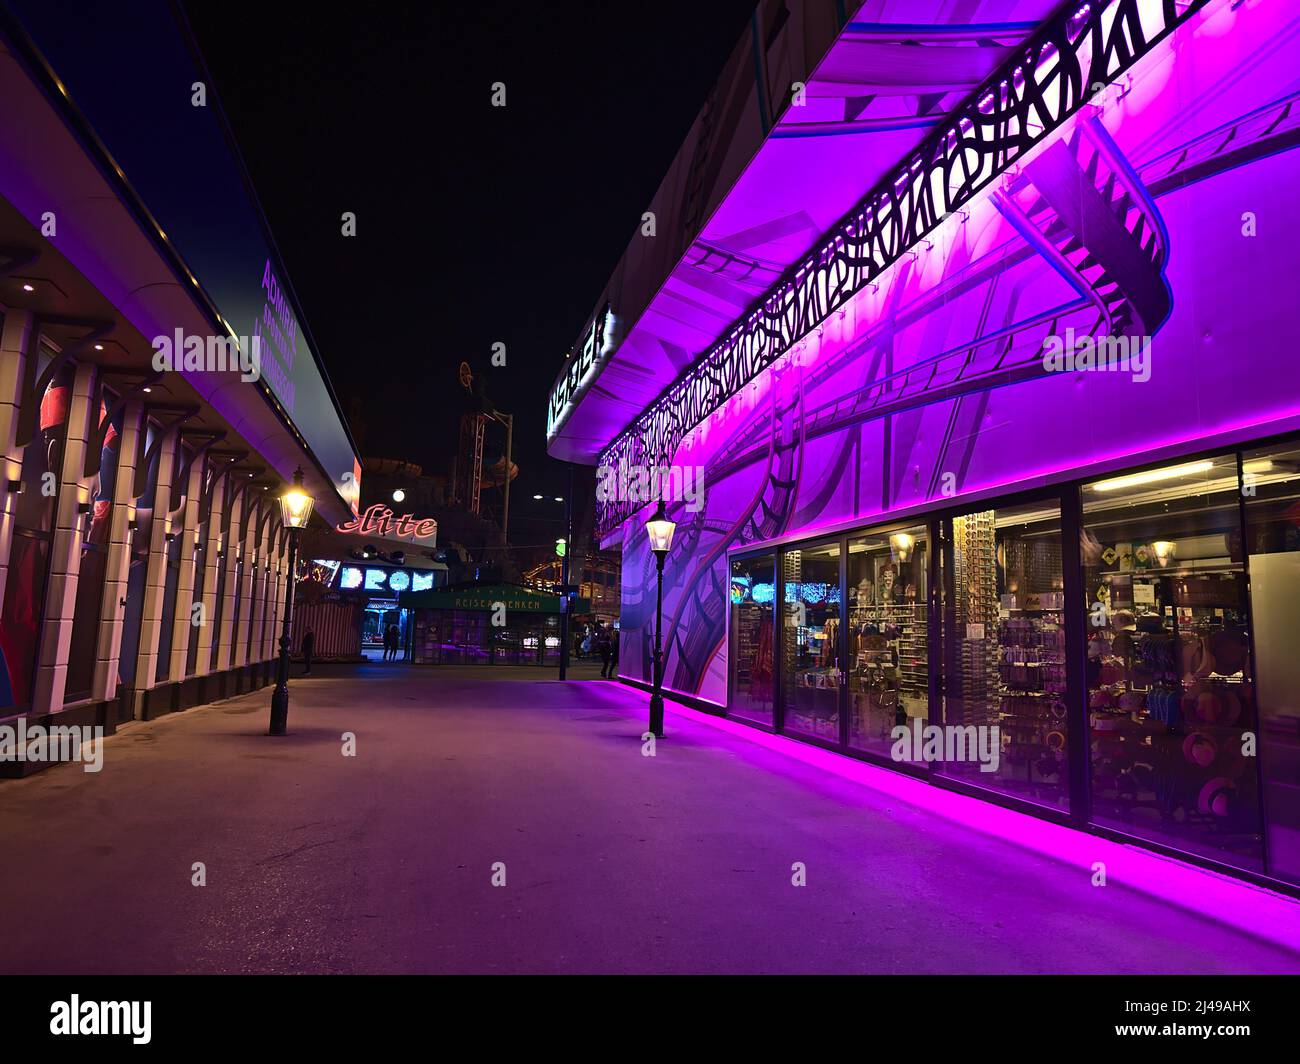 View of empty alley in popular amusement park Wurstelprater near Wiener Prater in Vienna, Austria at night with purple illuminated building. Stock Photo